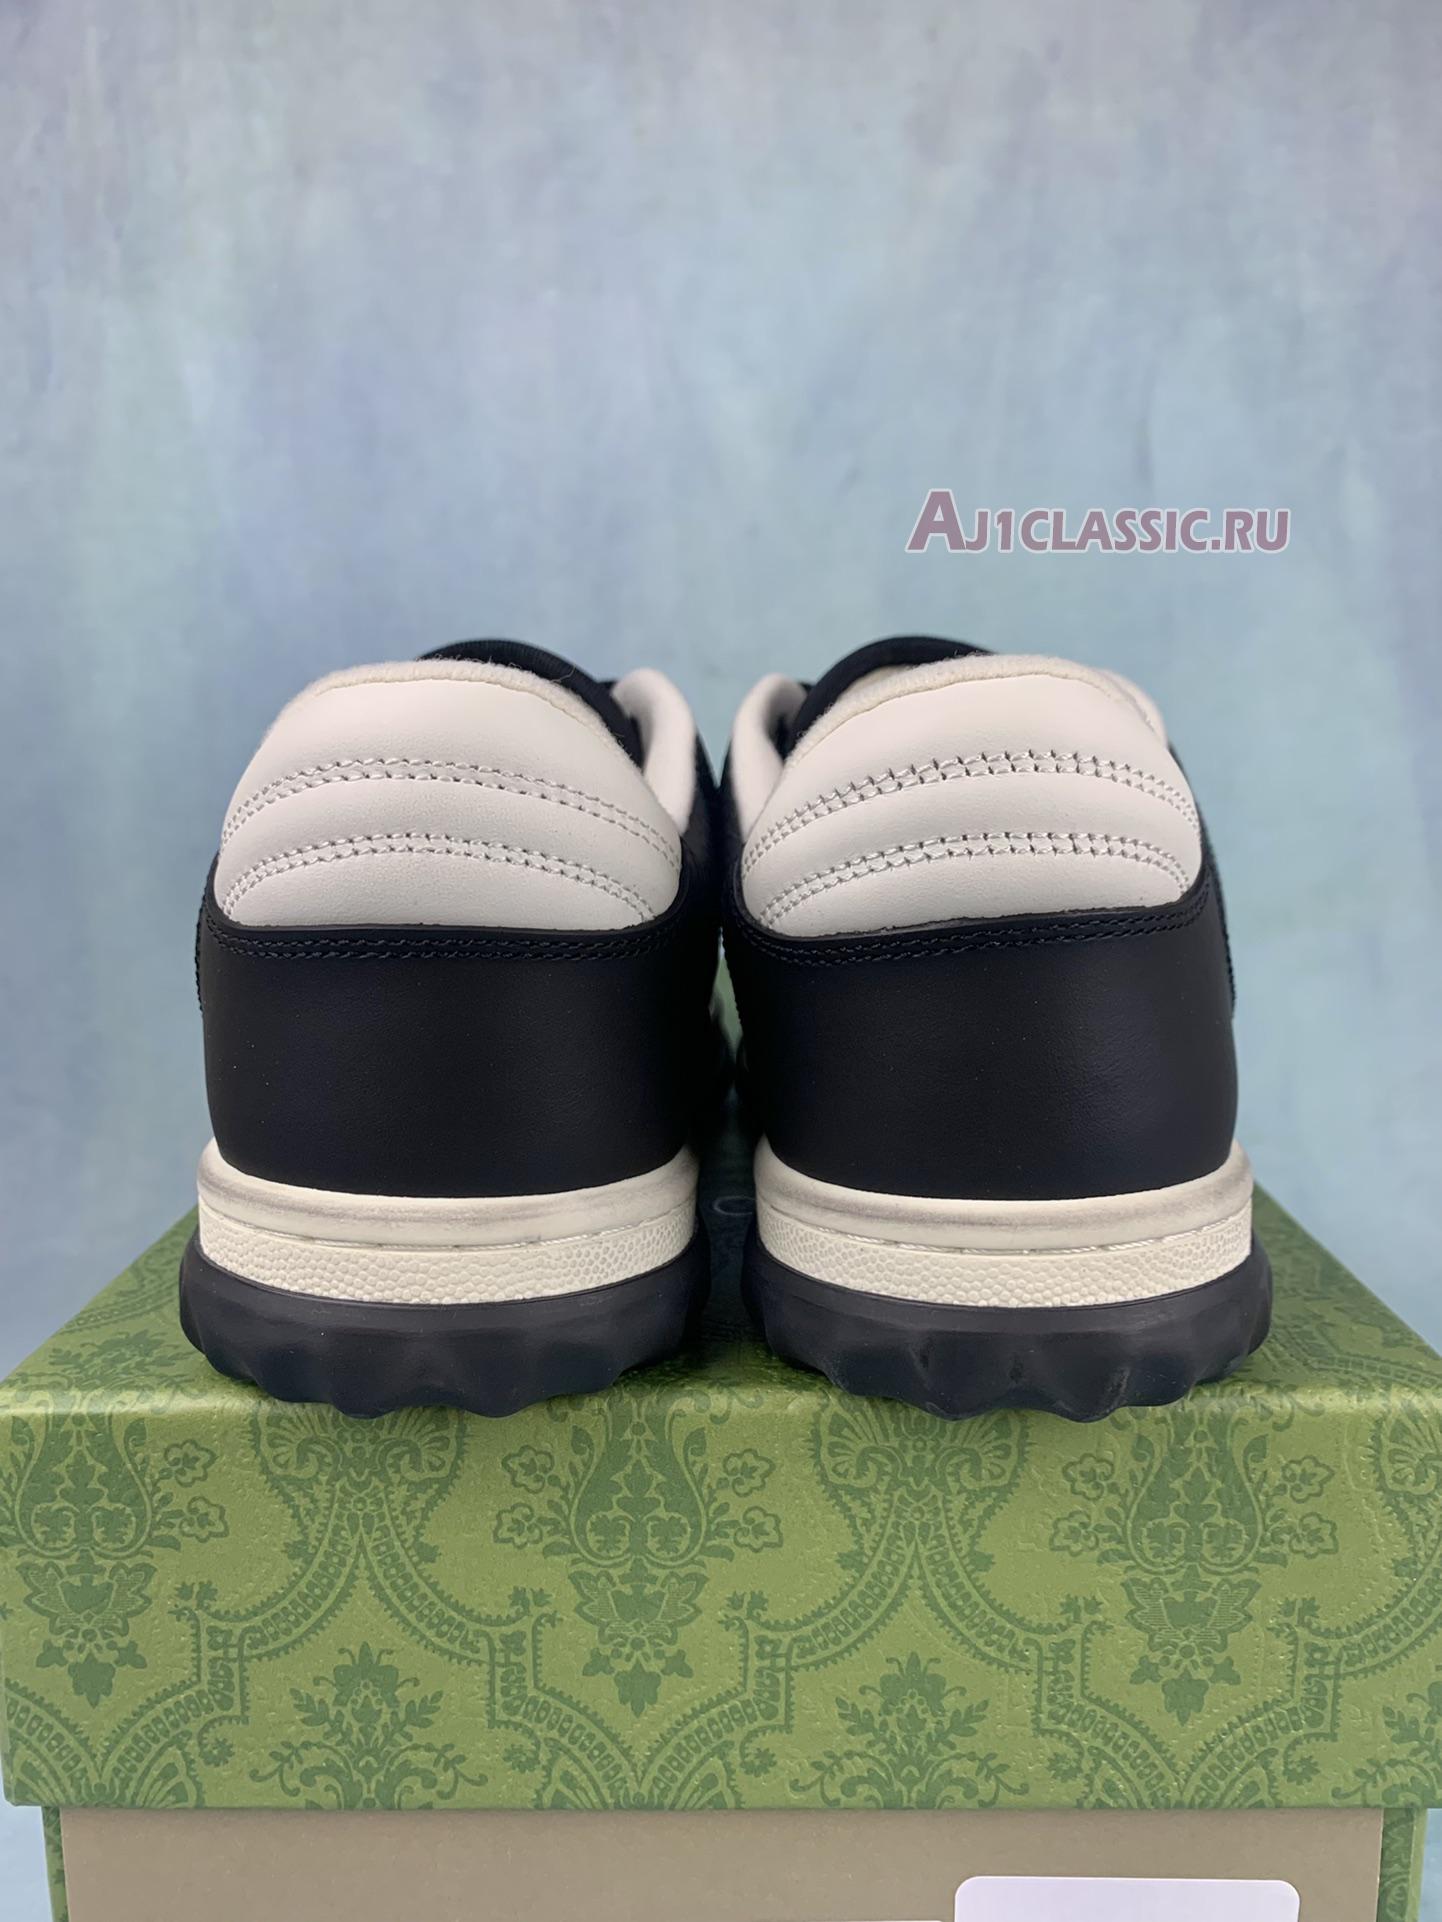 Gucci MAC80 Sneaker "Black Off White" 756811 AAB79 1051